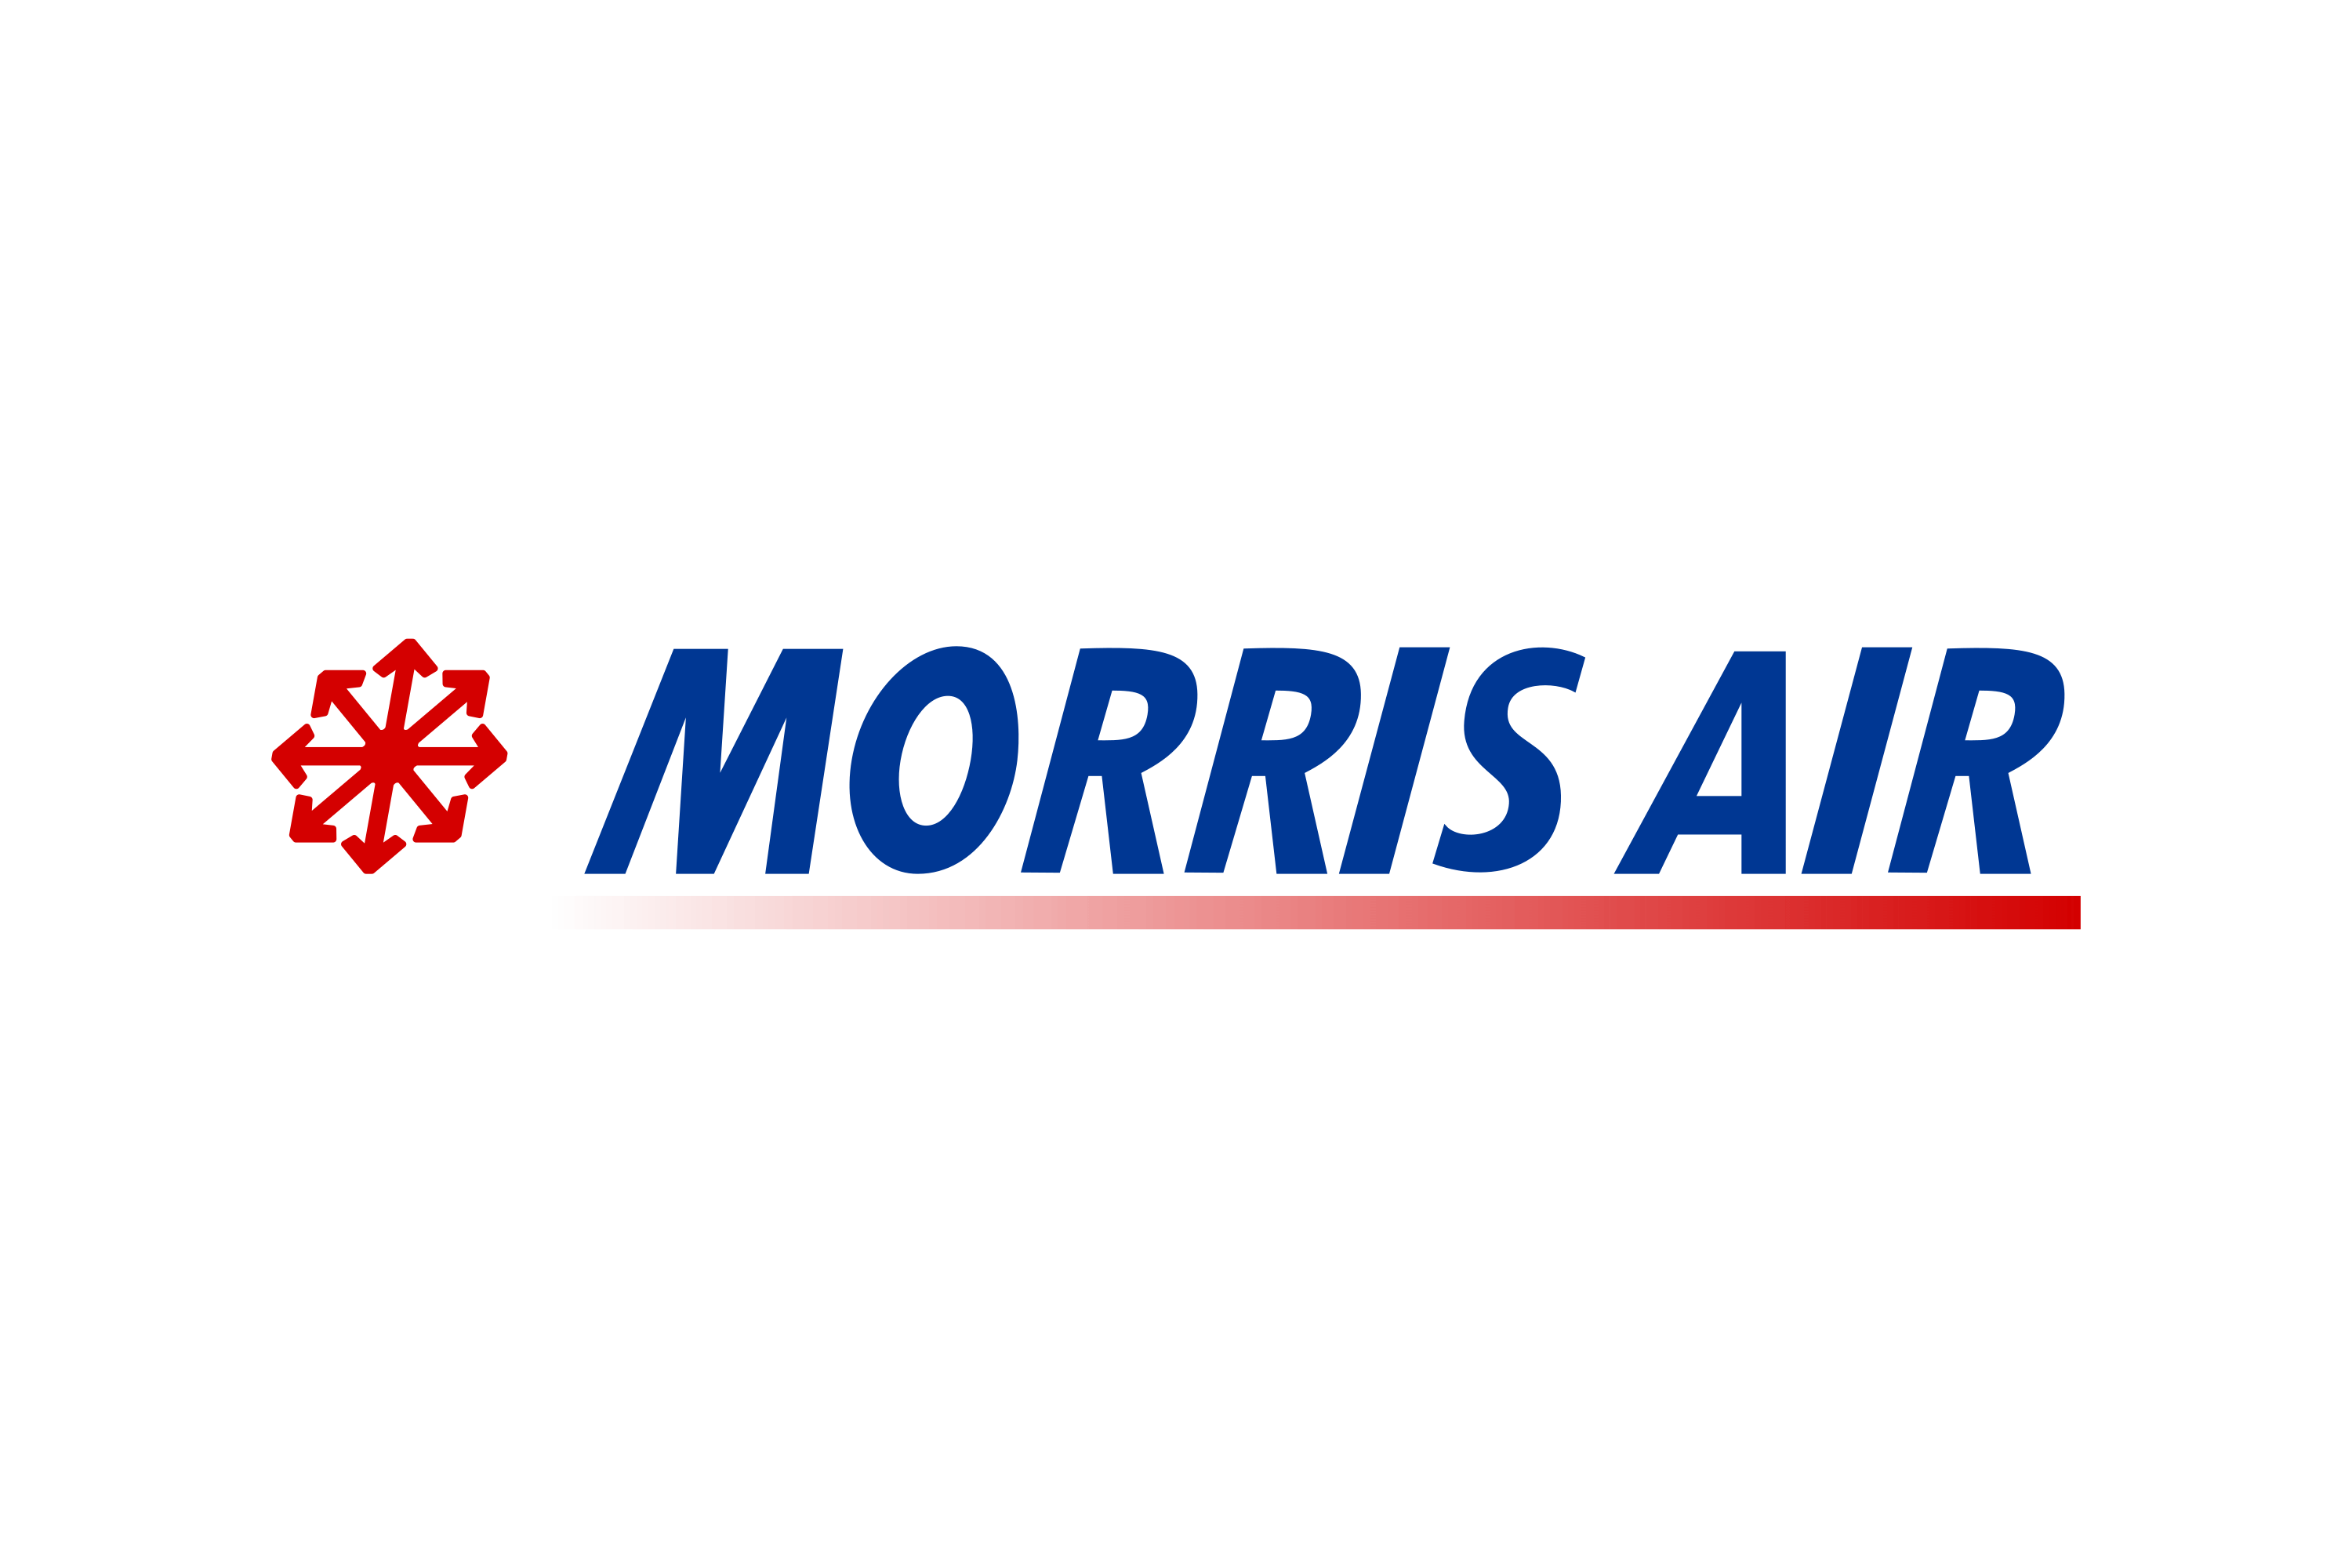 Morris Air Logo